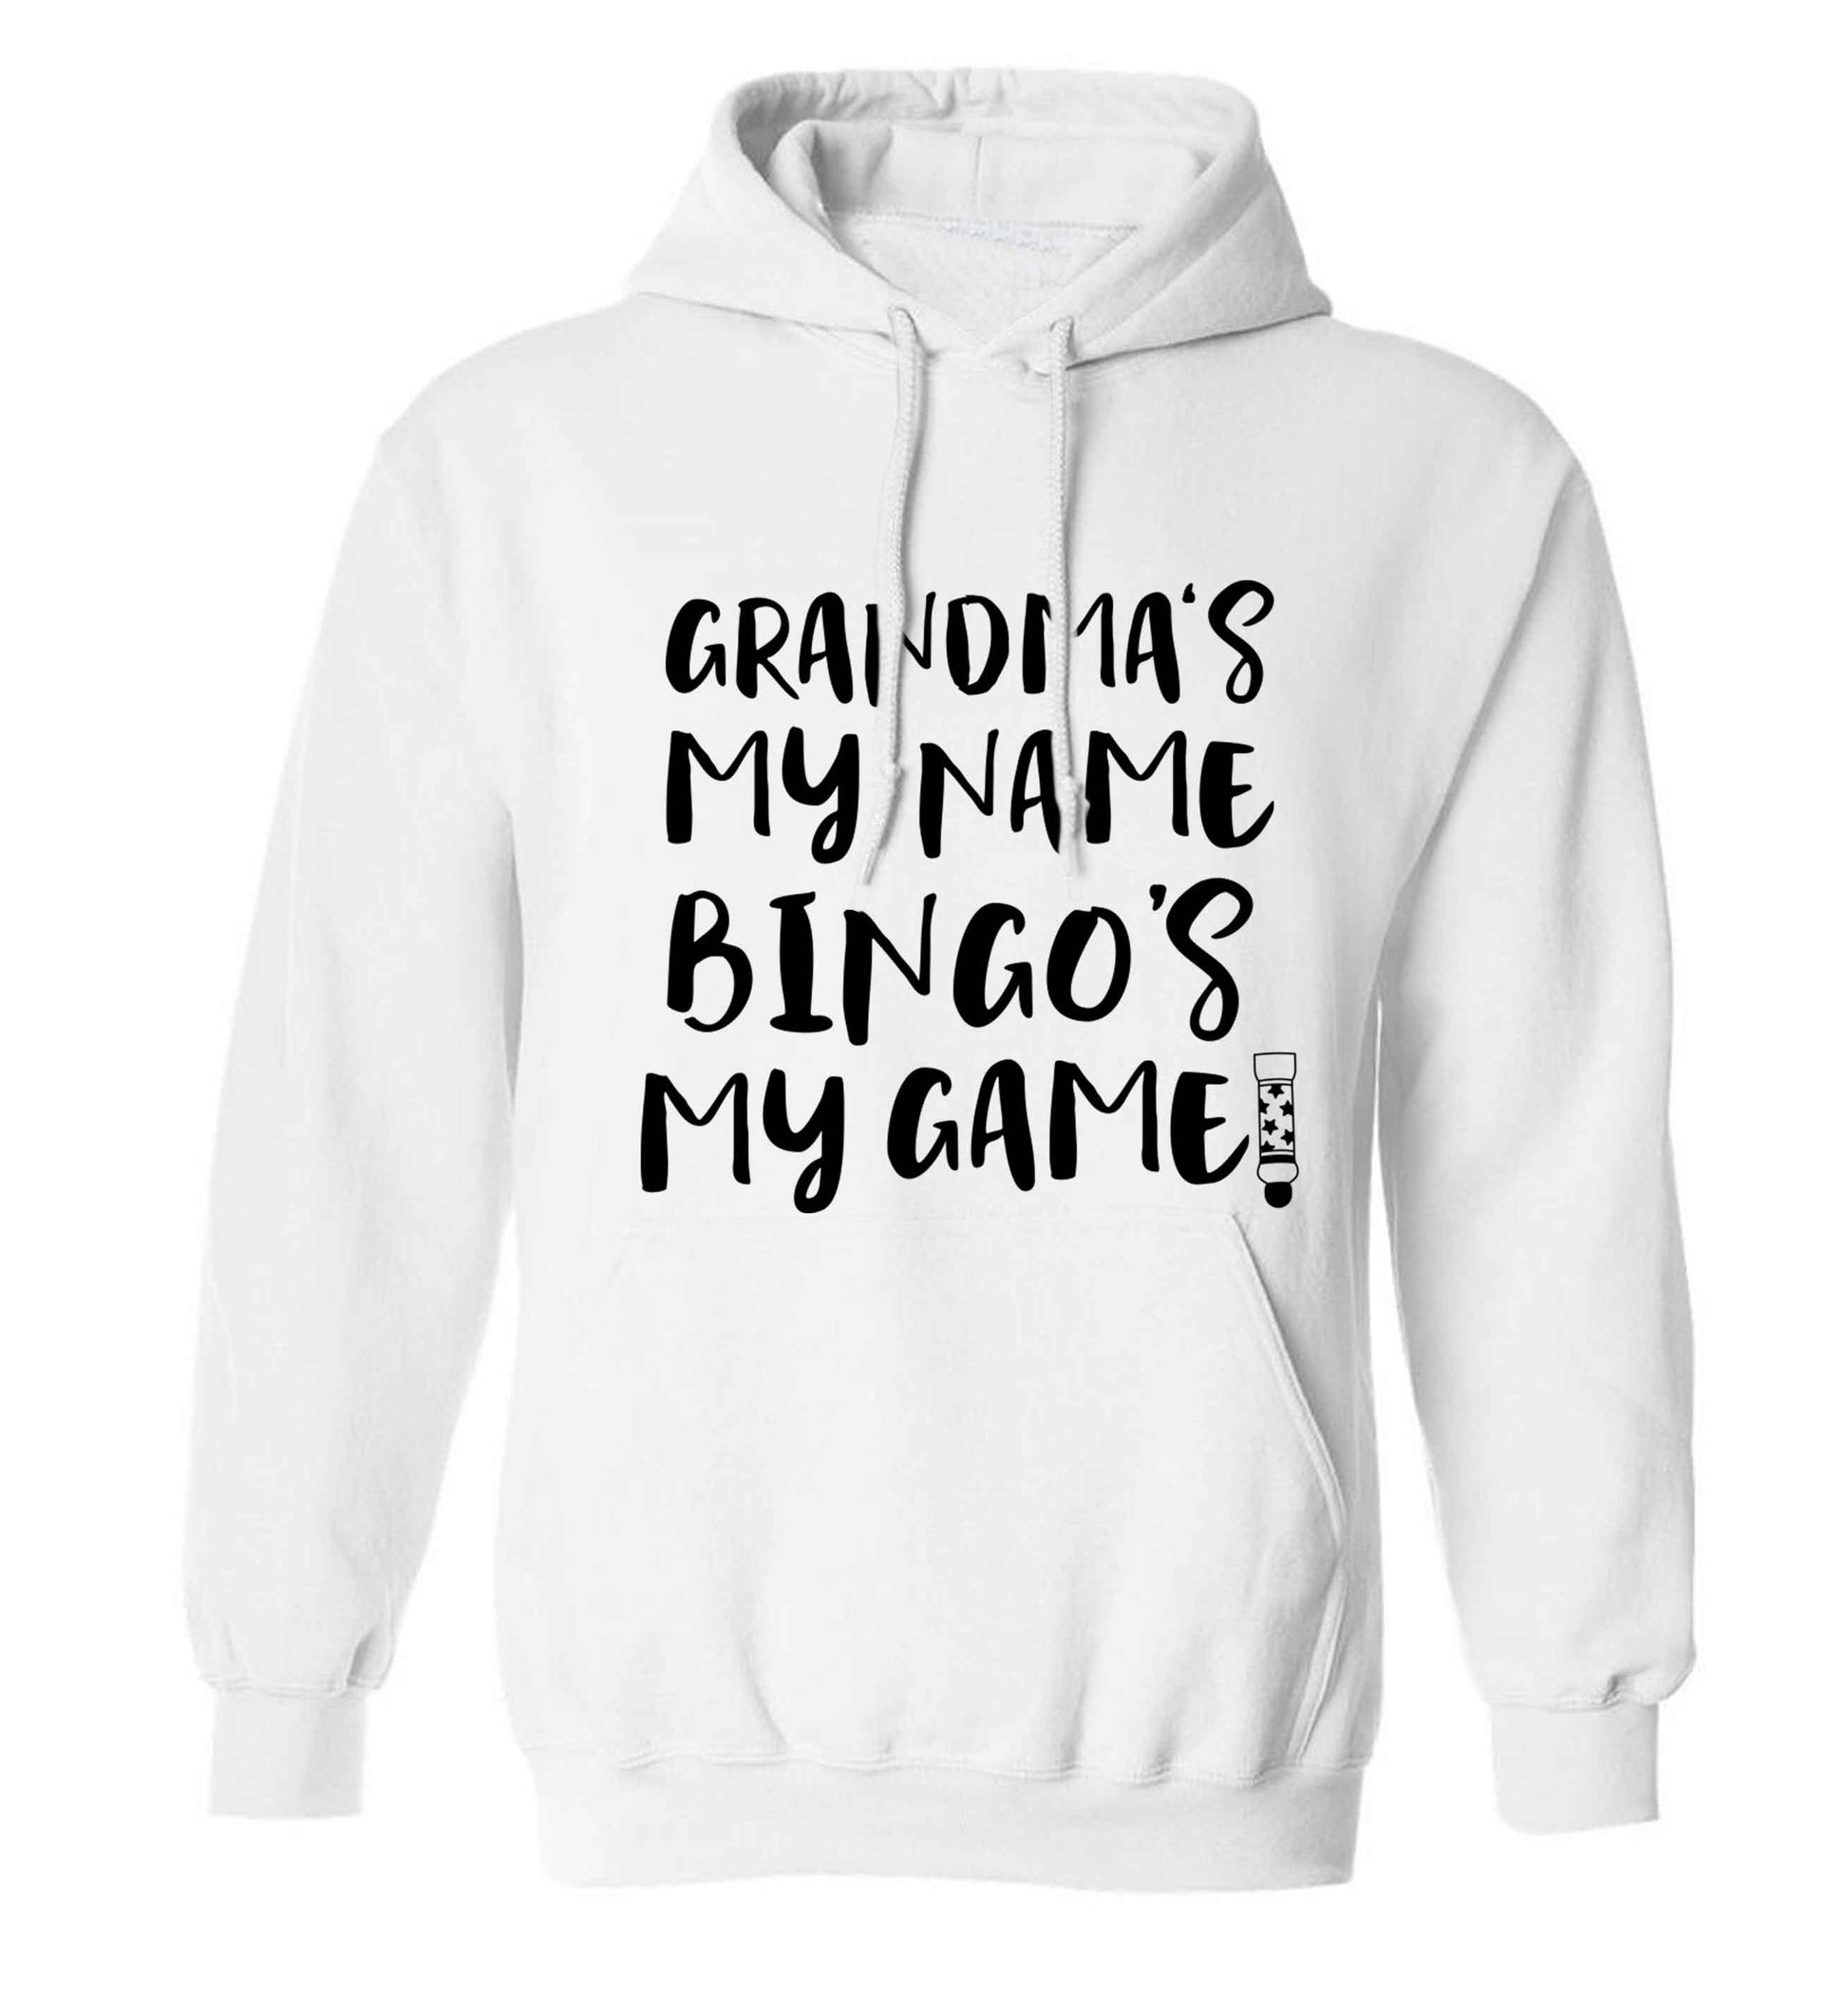 Grandma's my name bingo's my game! adults unisex white hoodie 2XL